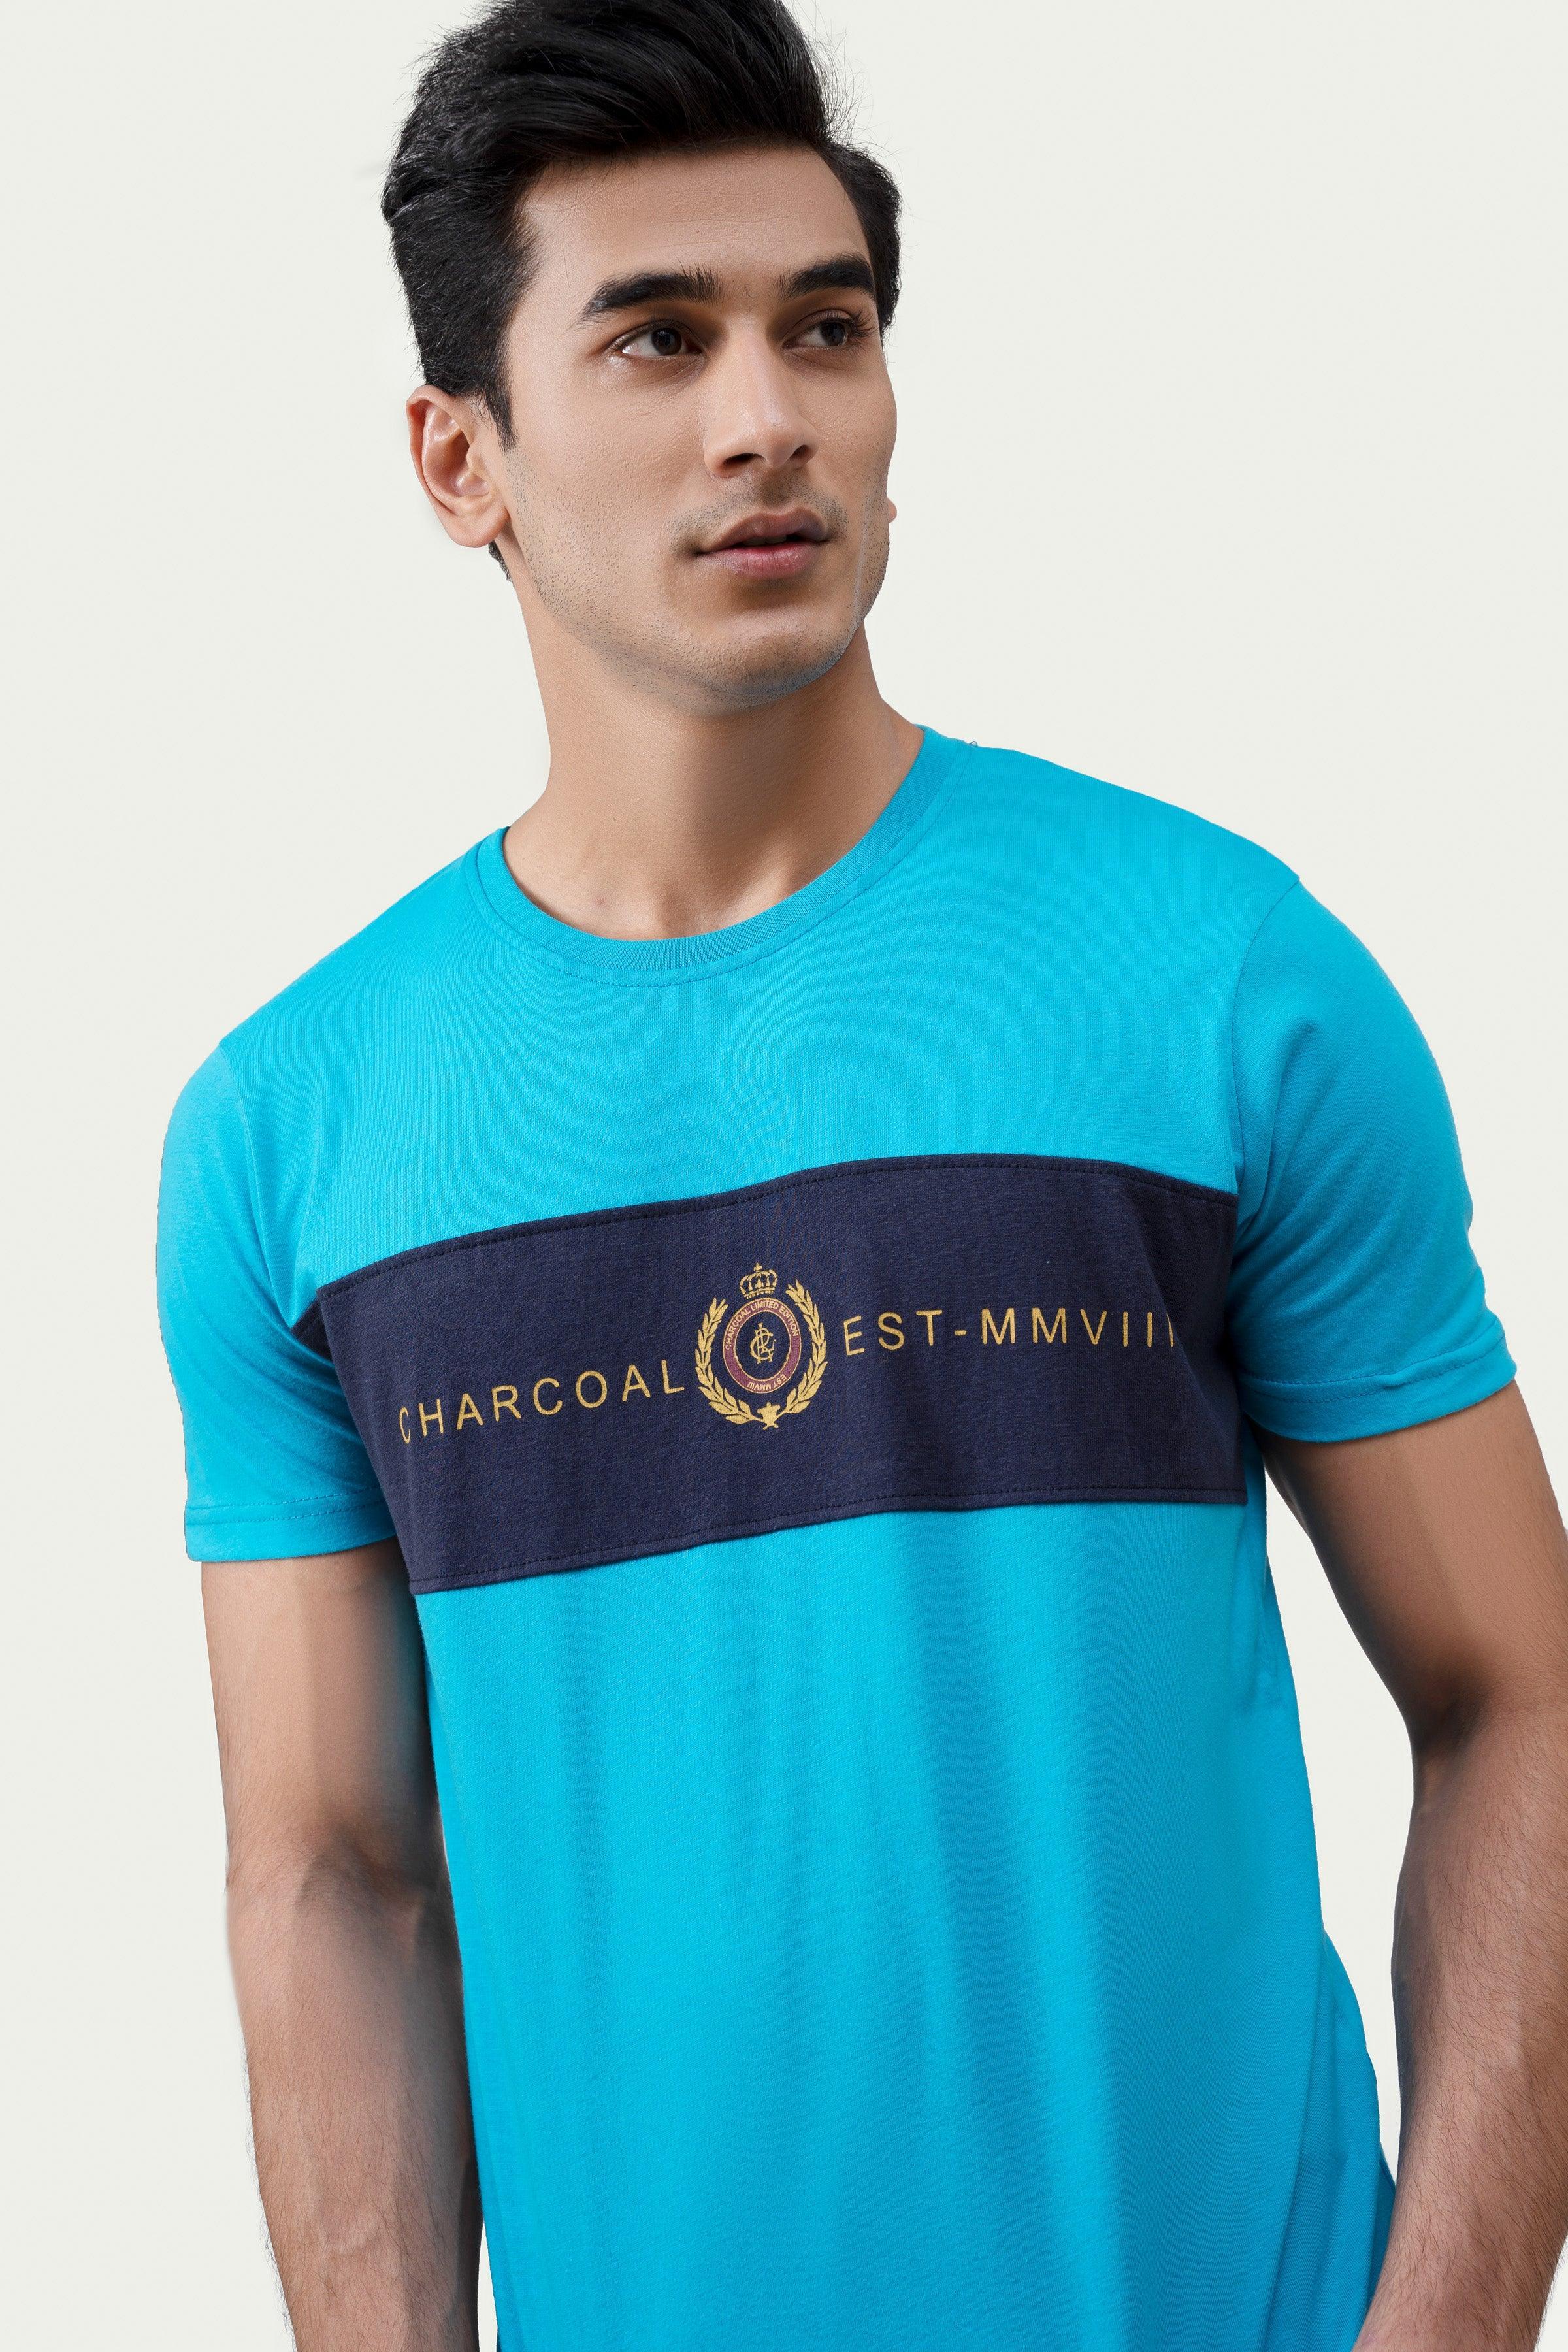 CUT & SEW PANEL T-SHIRT BLUE at Charcoal Clothing